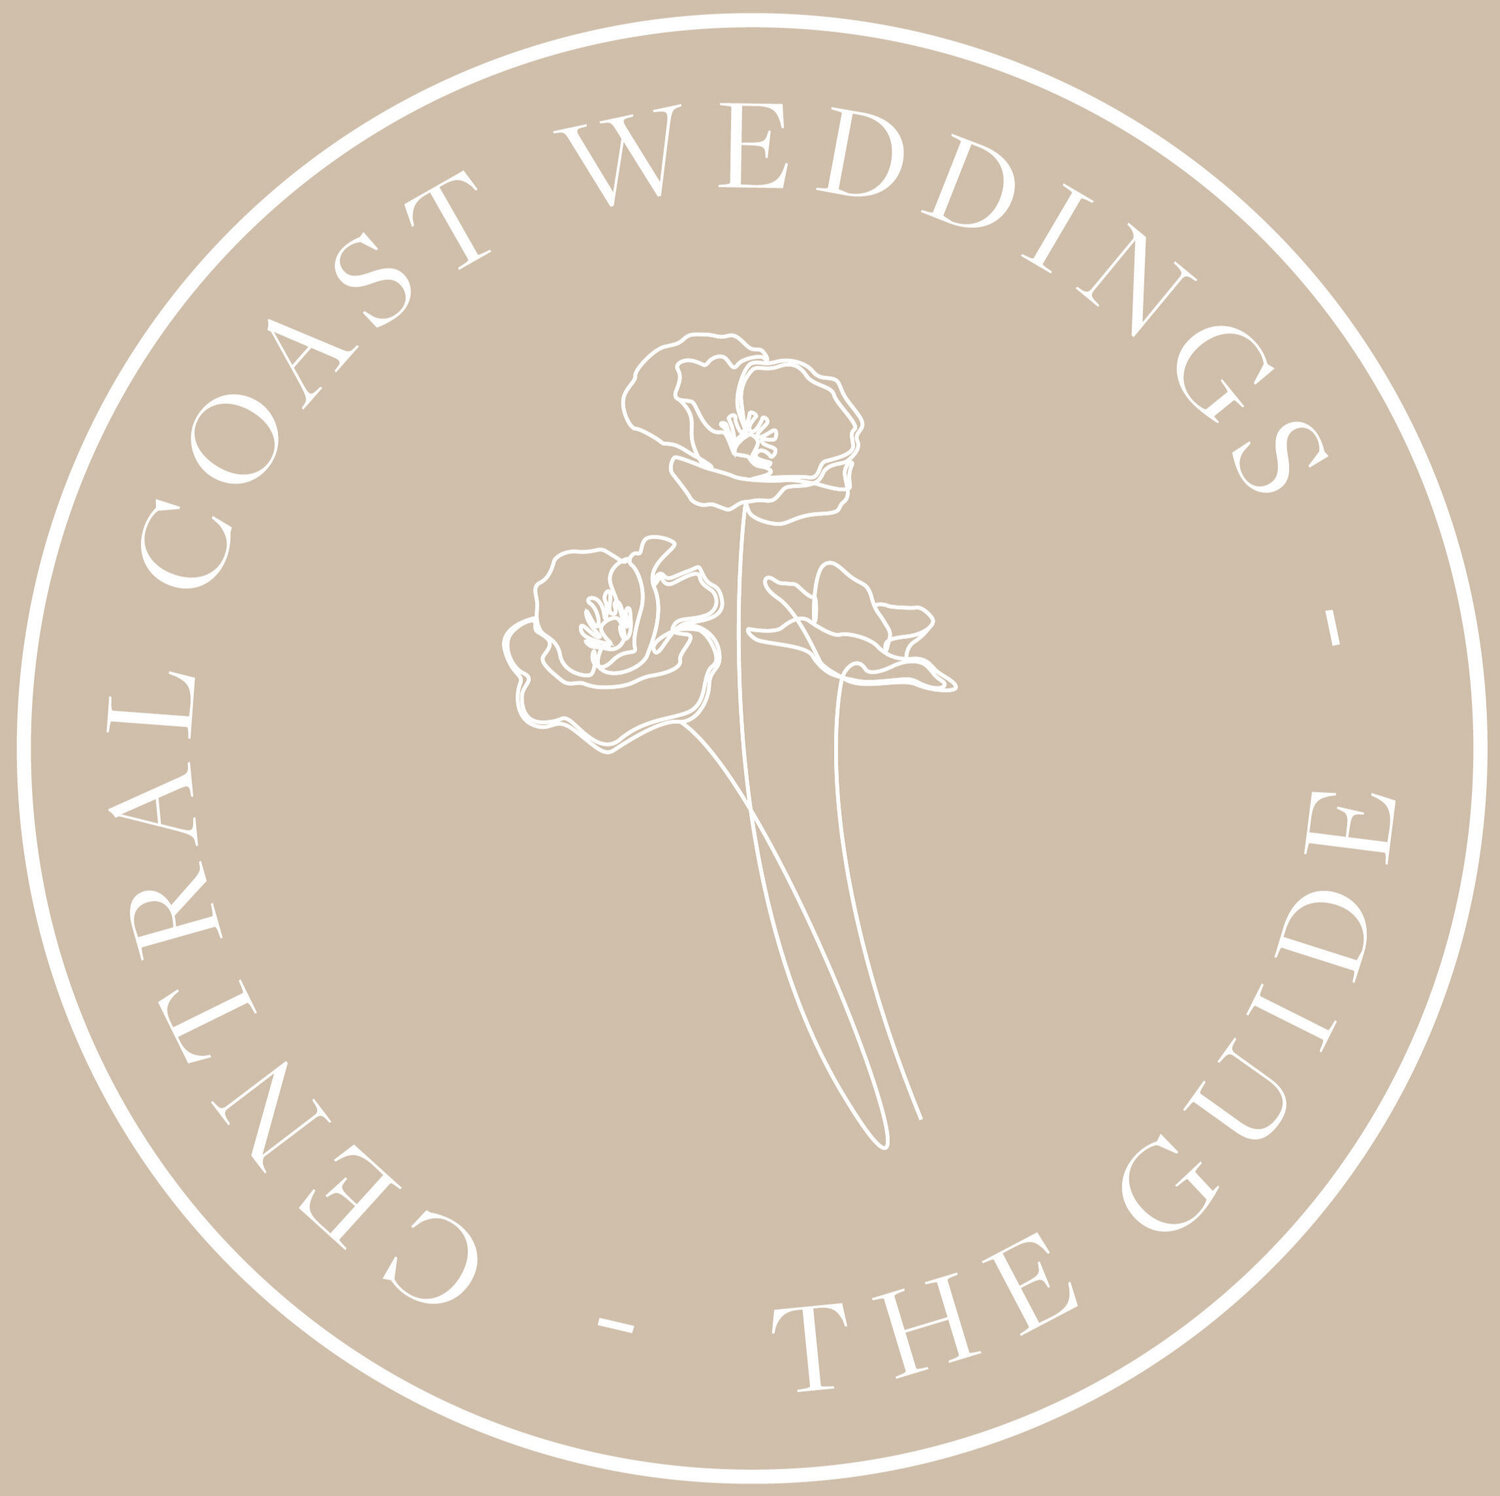 Central Coast Weddings